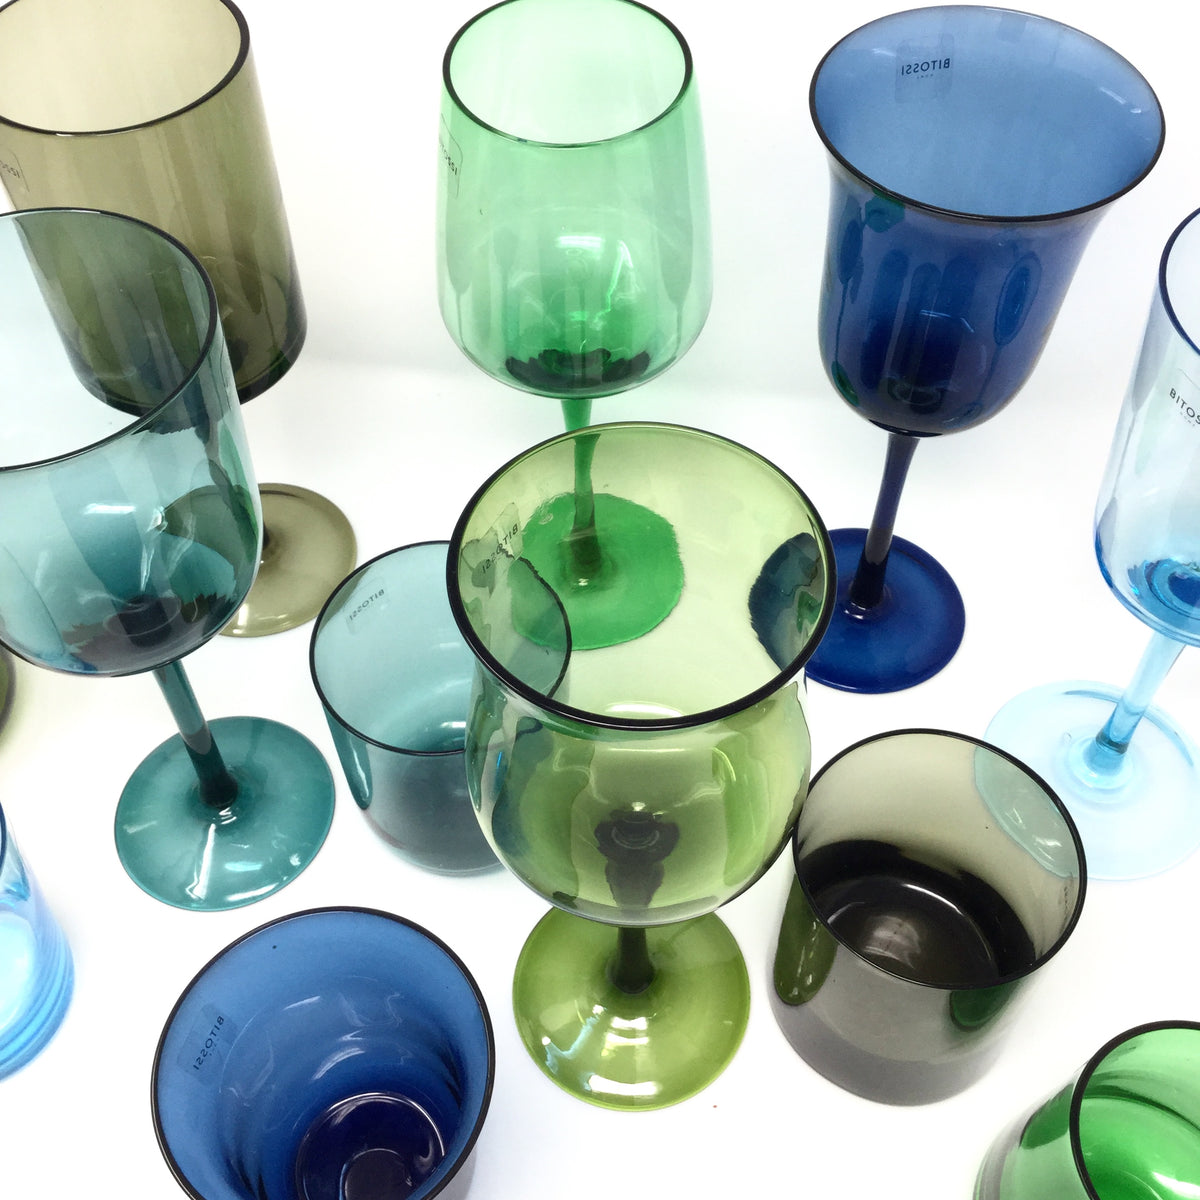 Desigual Wine Glasses Blue & Green Mix